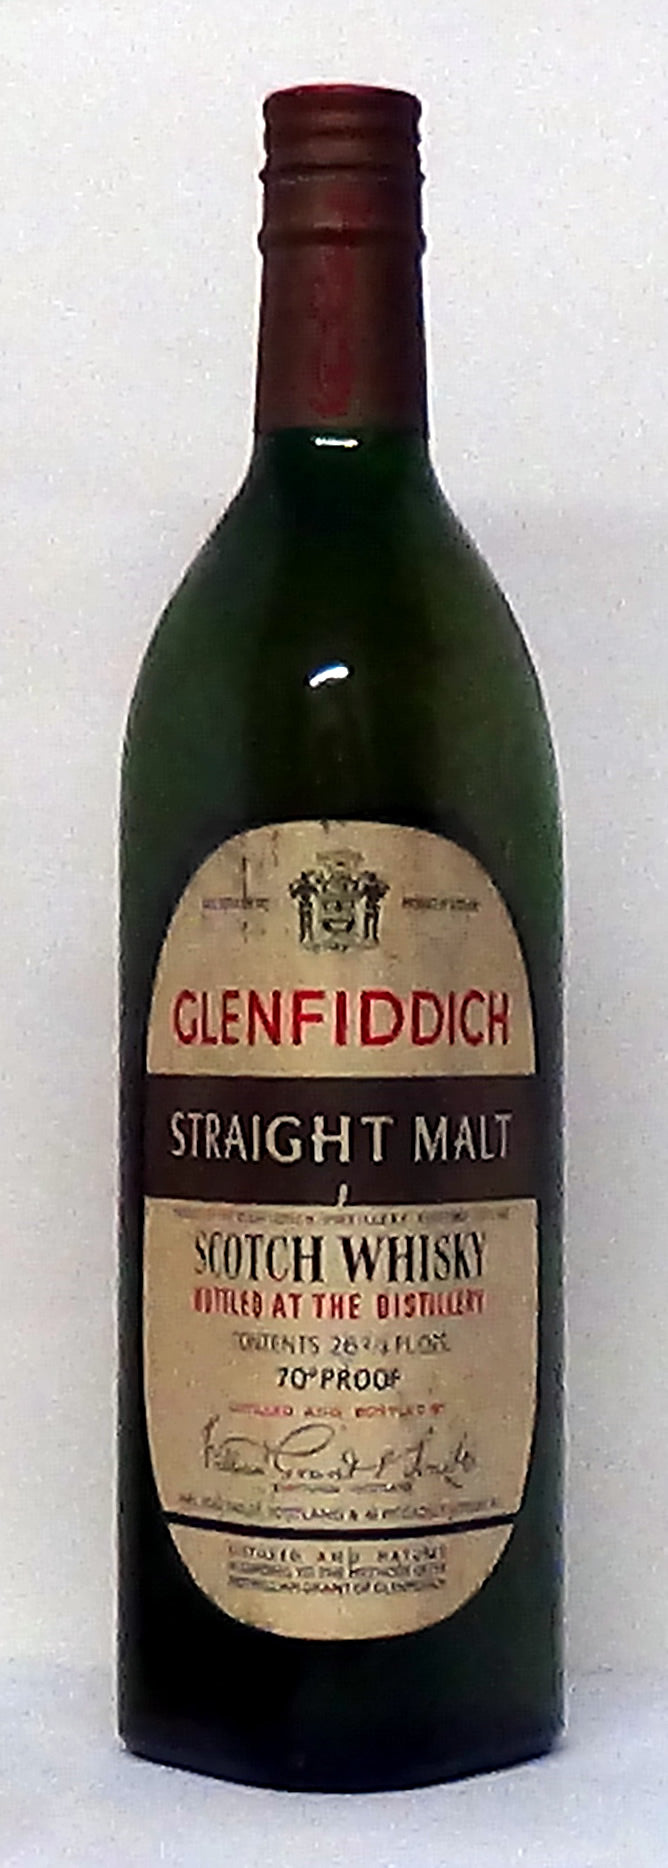 Glenfiddich Straight Malt 1960’s 26fl oz - M&M Personal Vintners Ltd